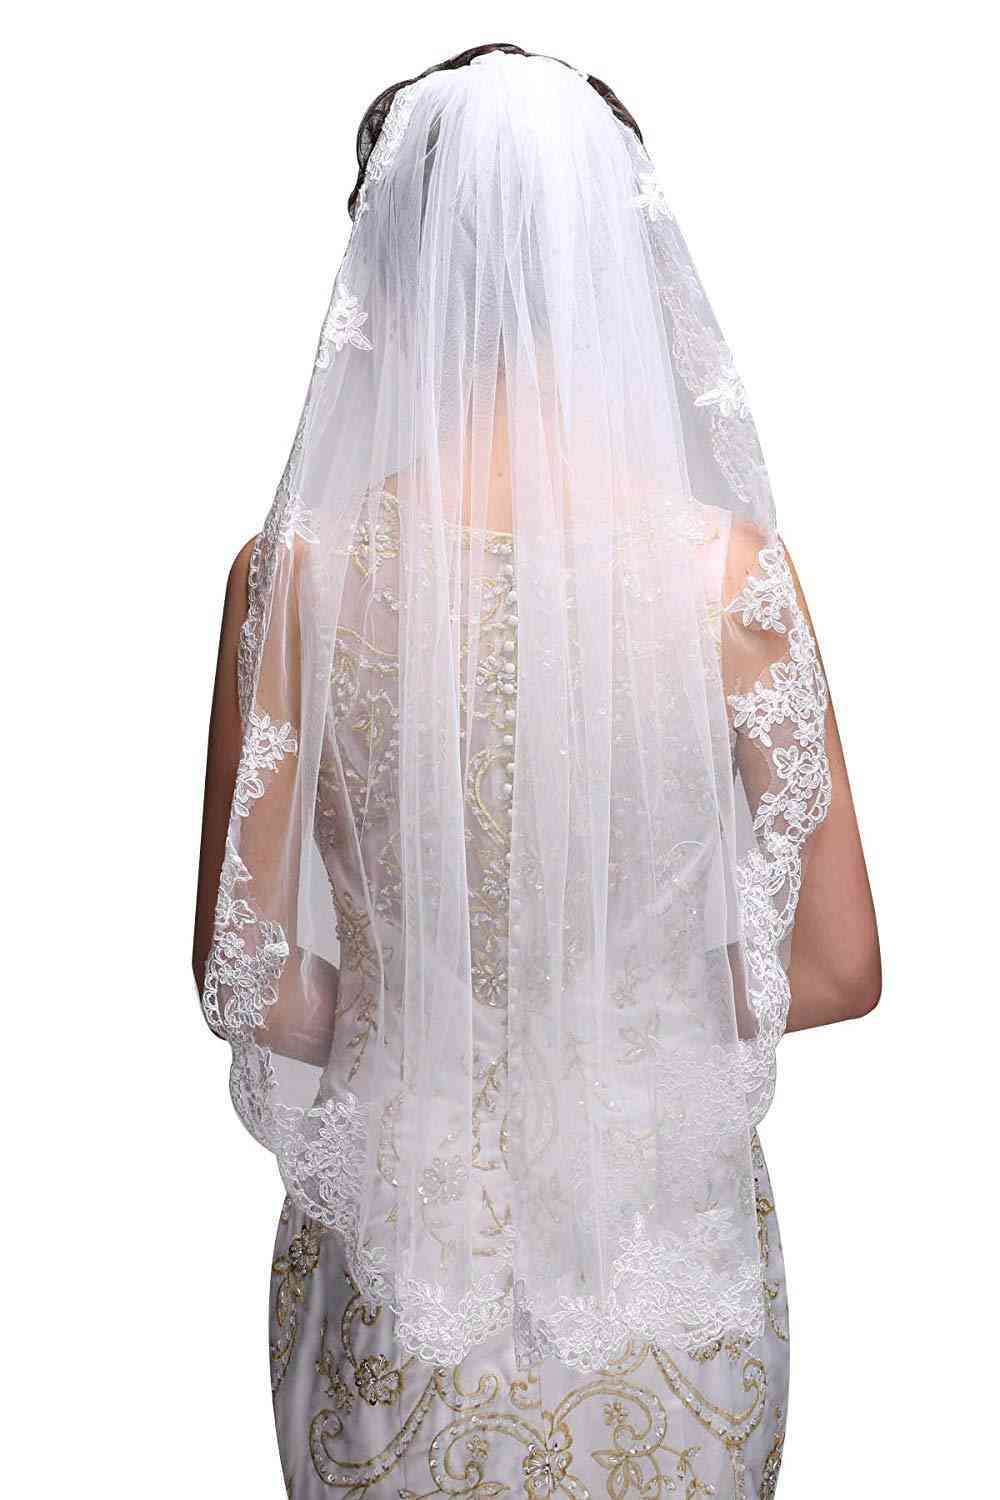 Short Bridal Head, Veil Wedding Accessories